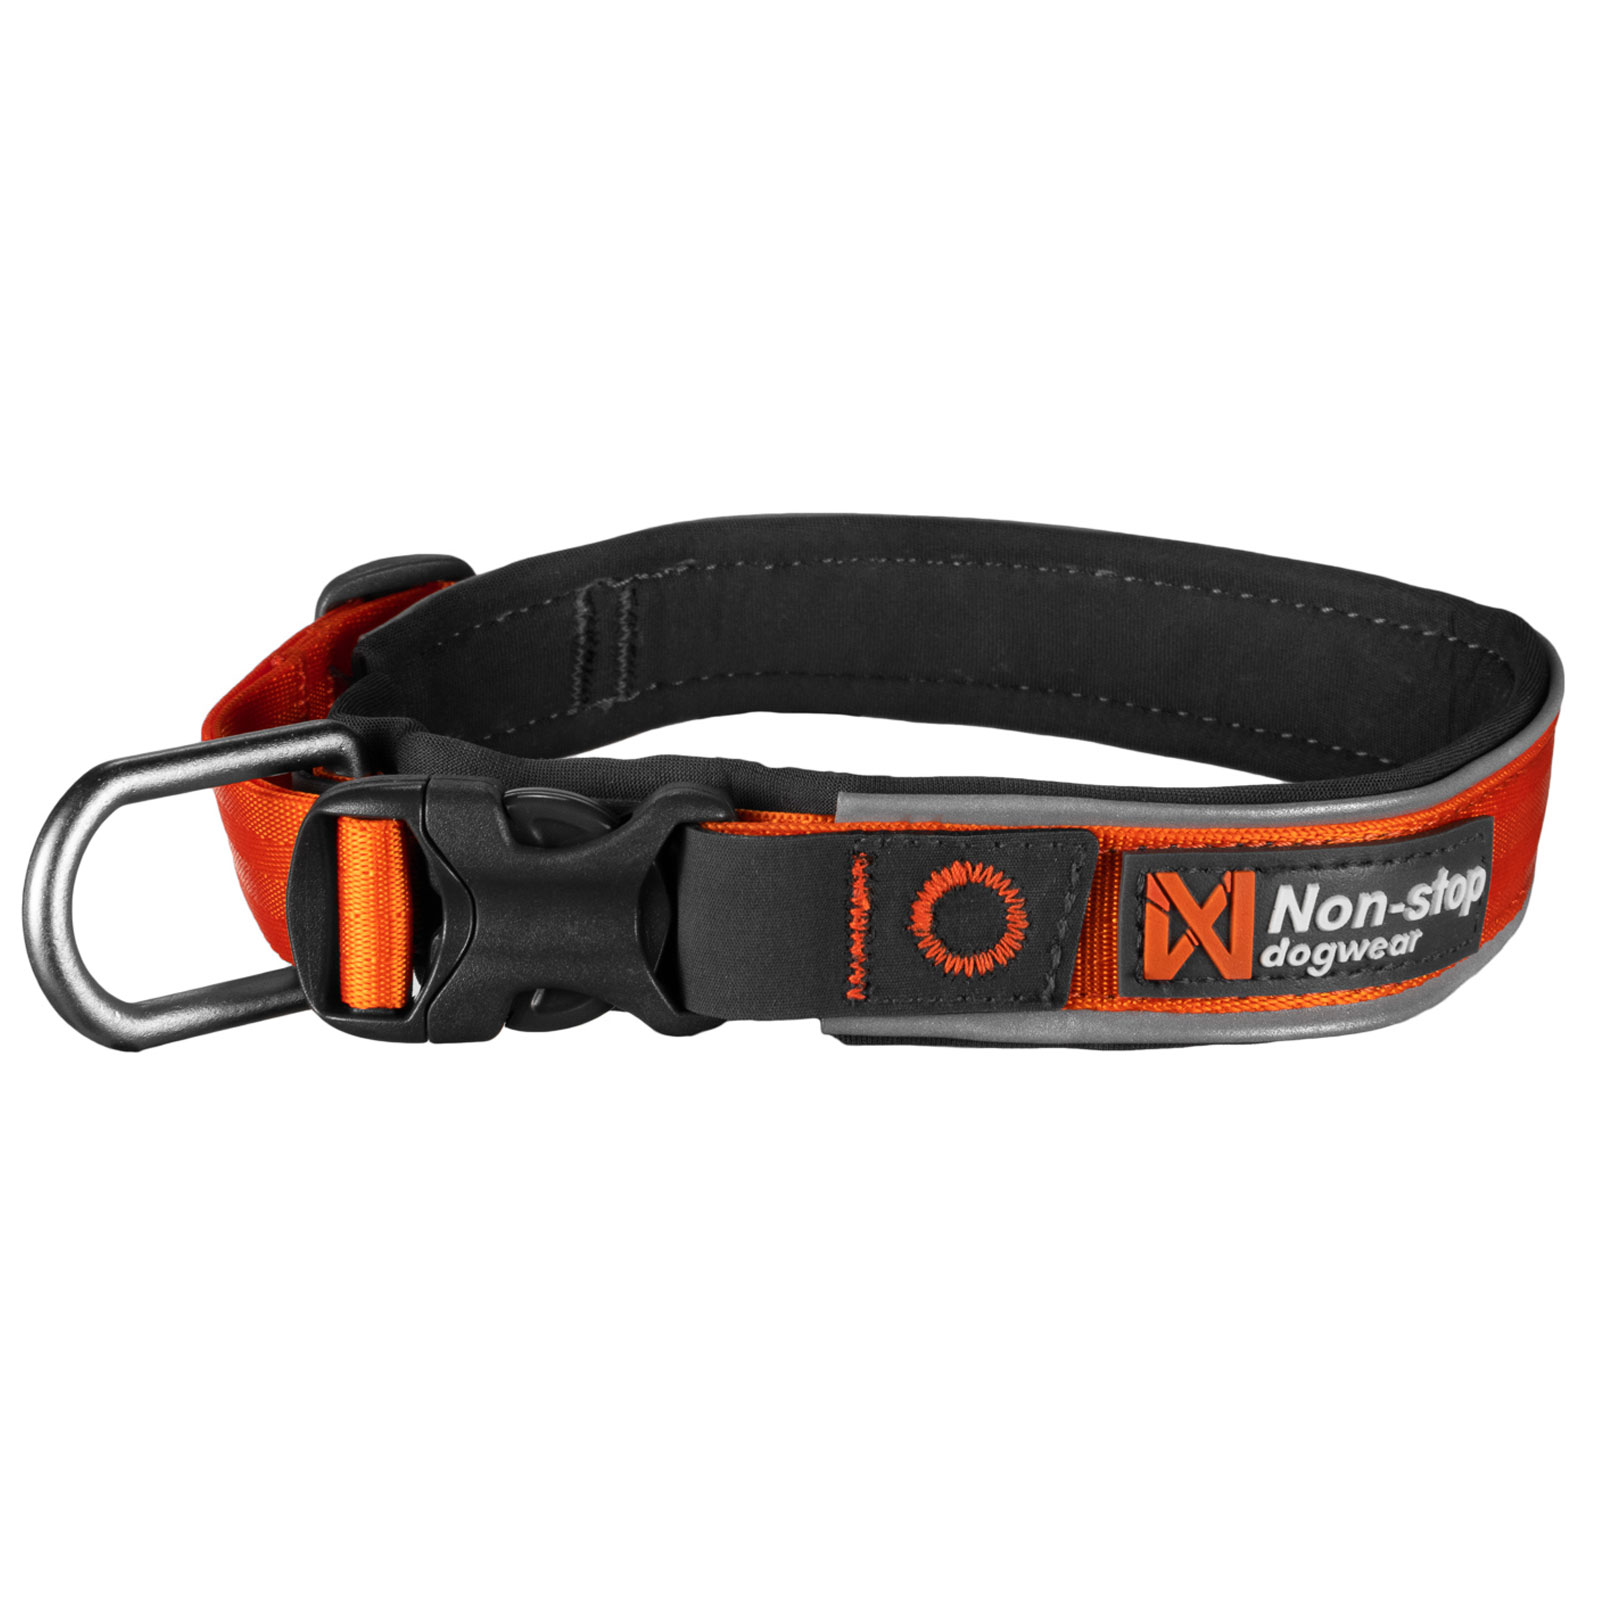 Non-stop dogwear ROAM Collar orange | 345 | Halsband von Non-stop dogwear